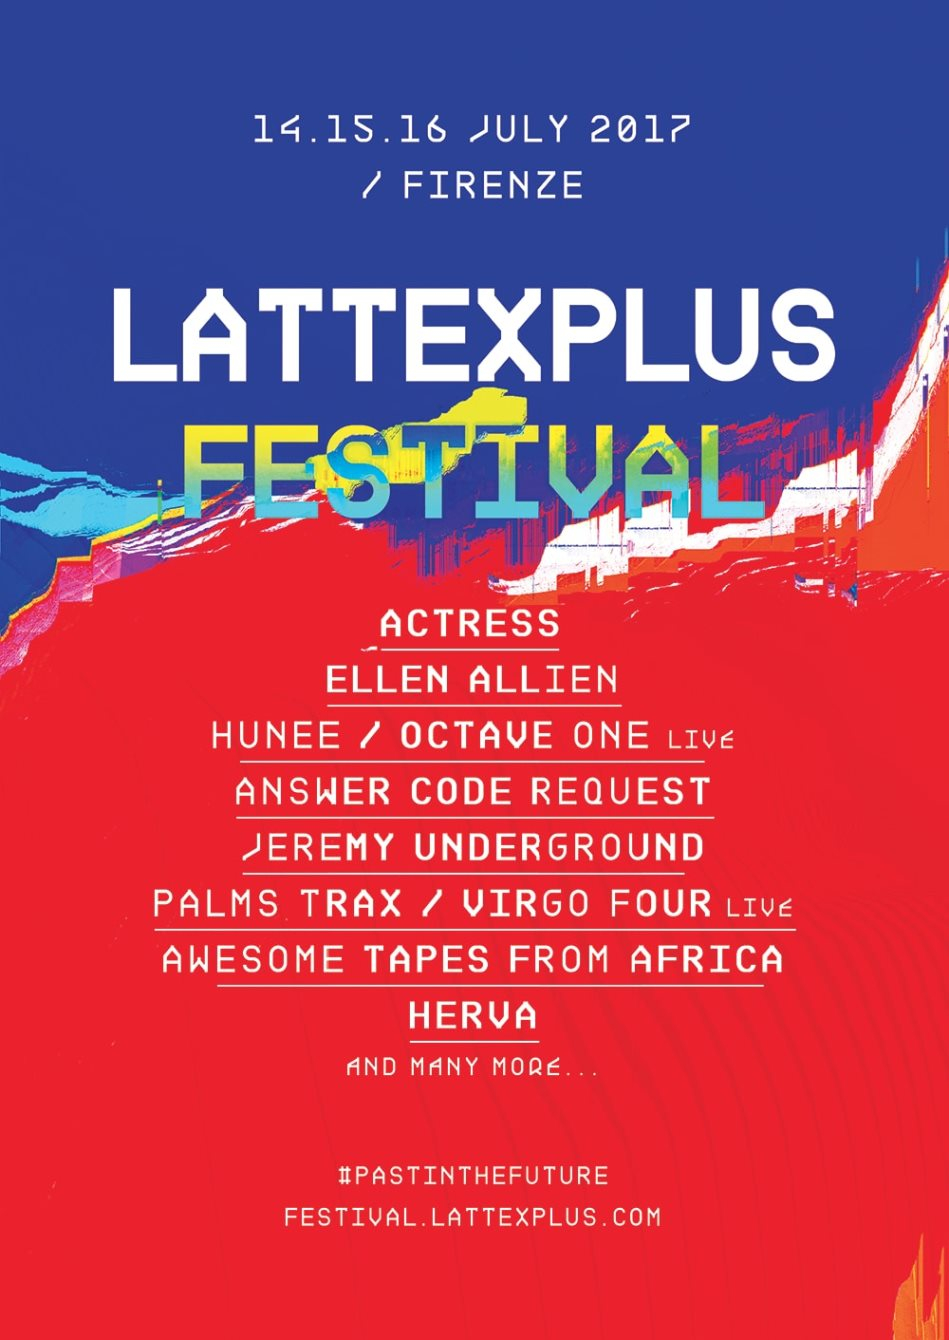 Lattexplus Festival - Flyer front